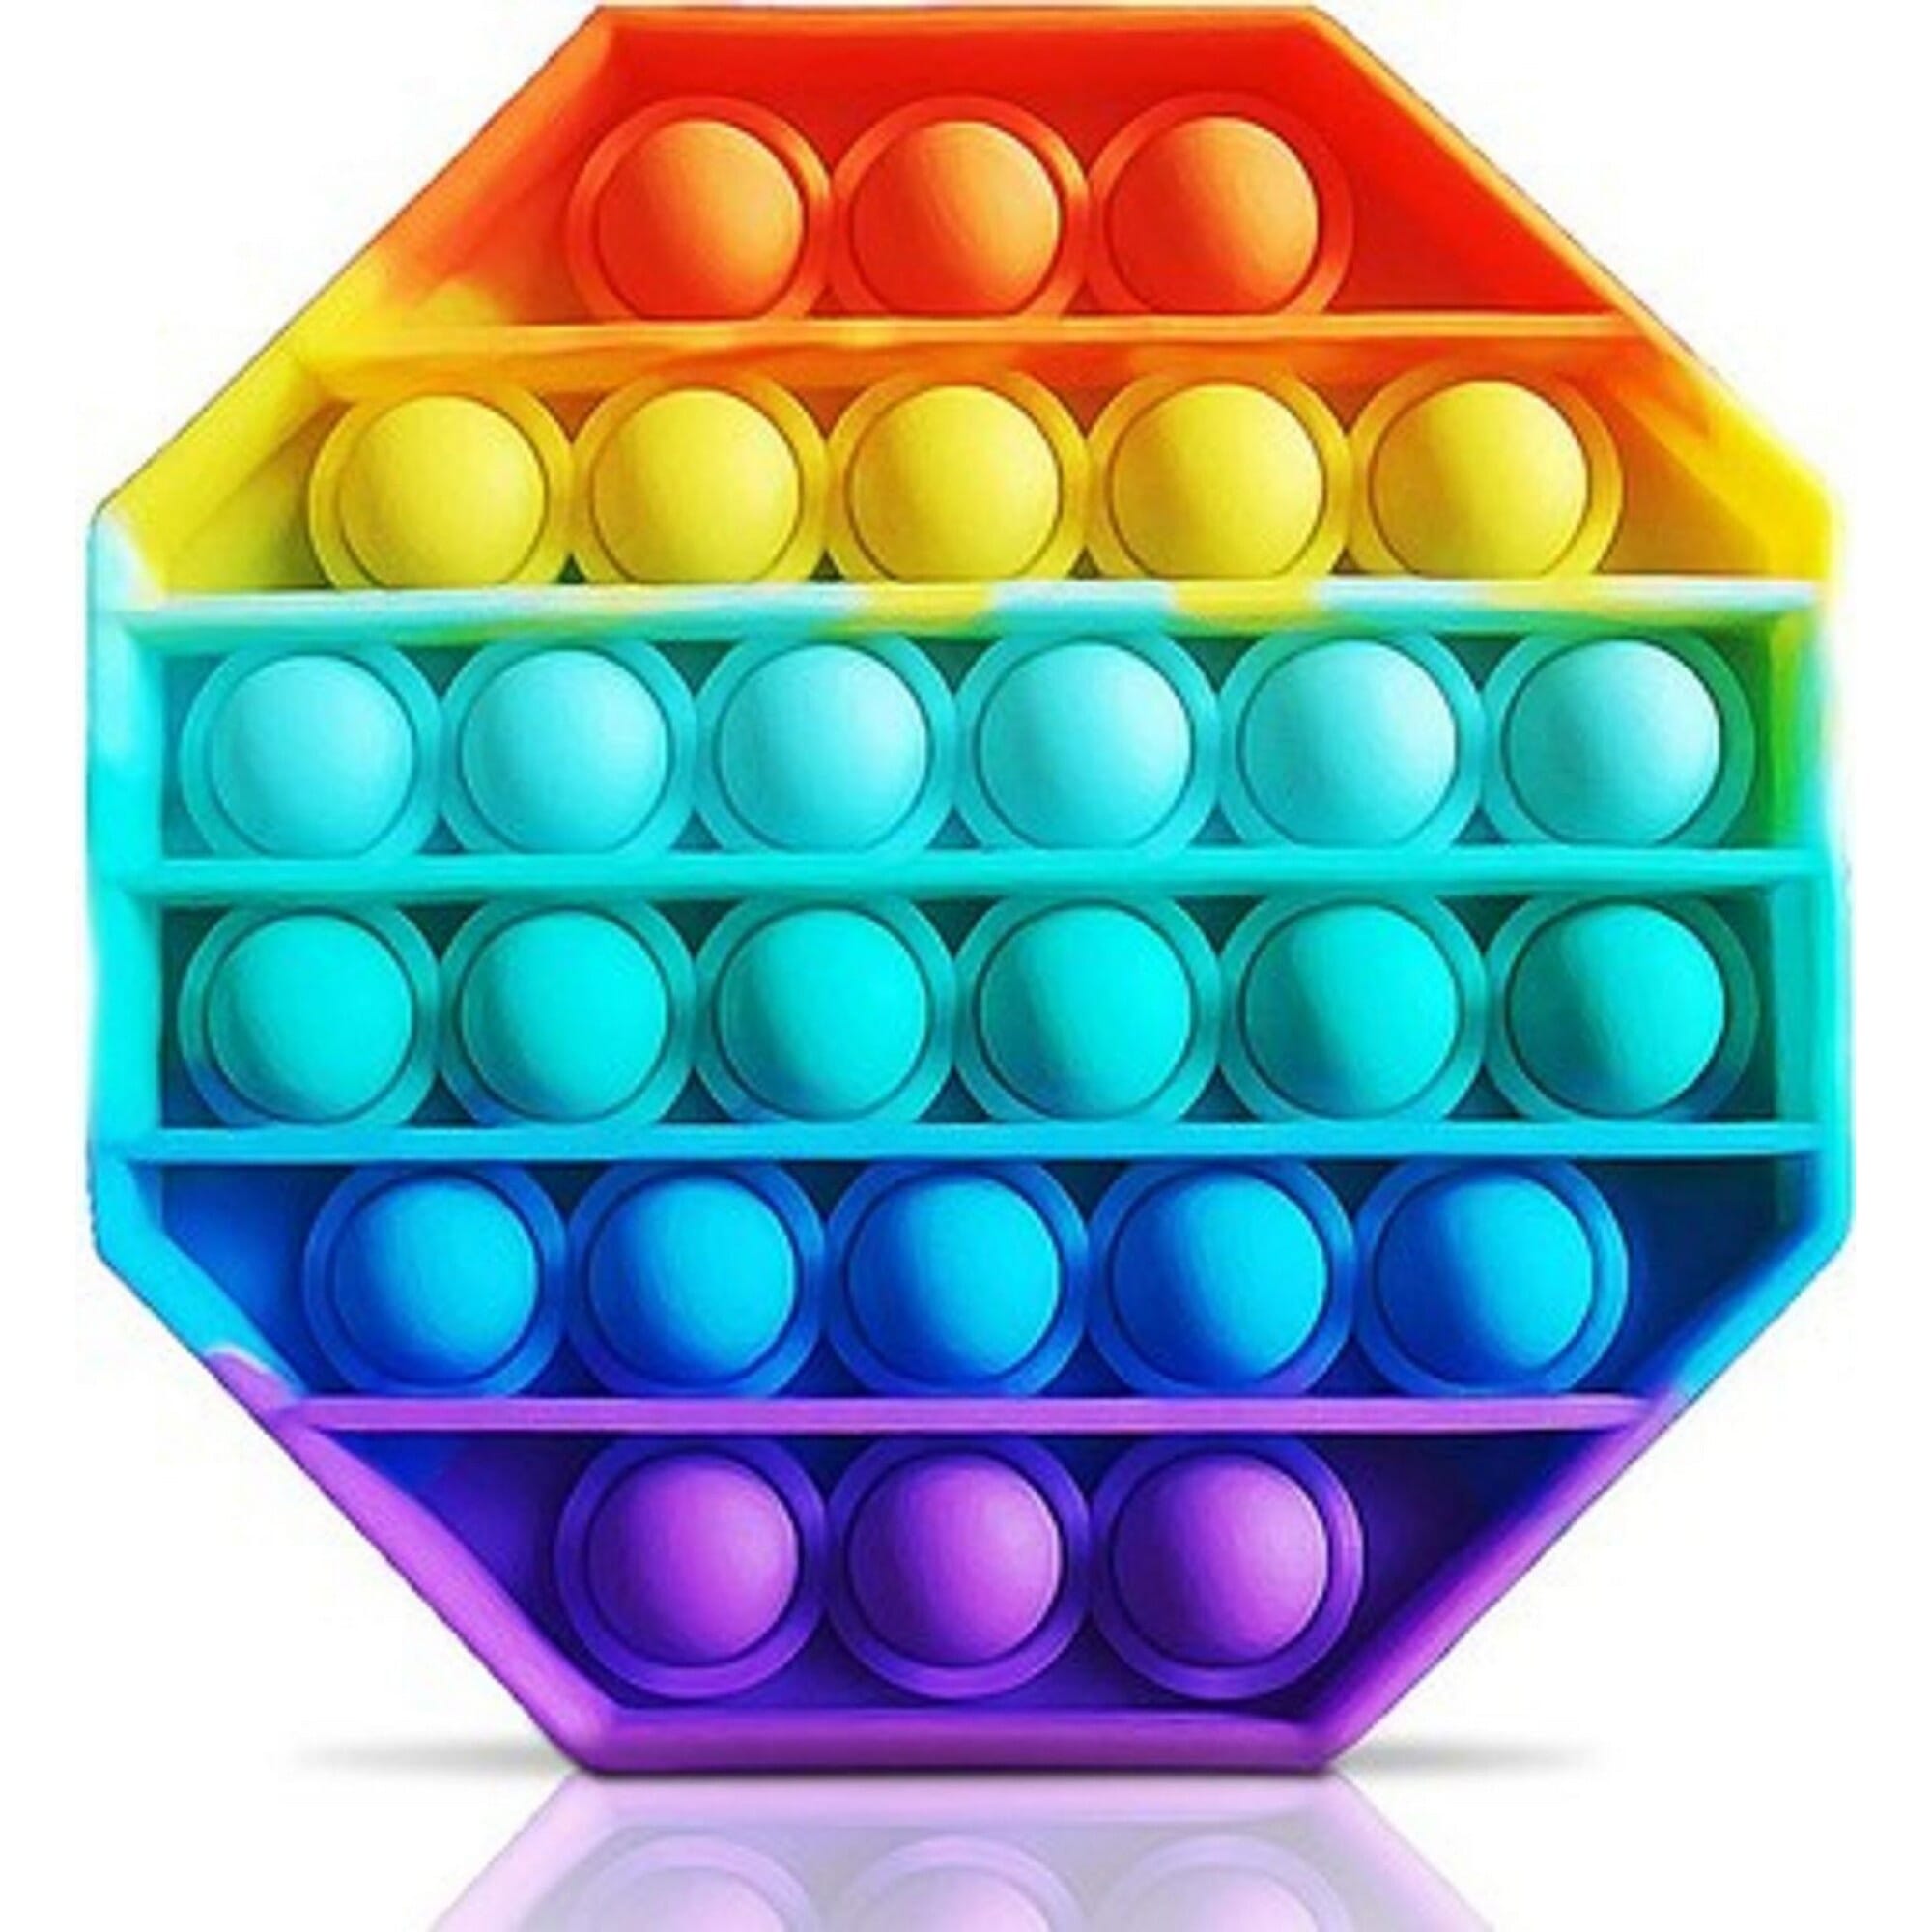 Pop it Fidget Toy- Known from TikTok - Hexagon - Red